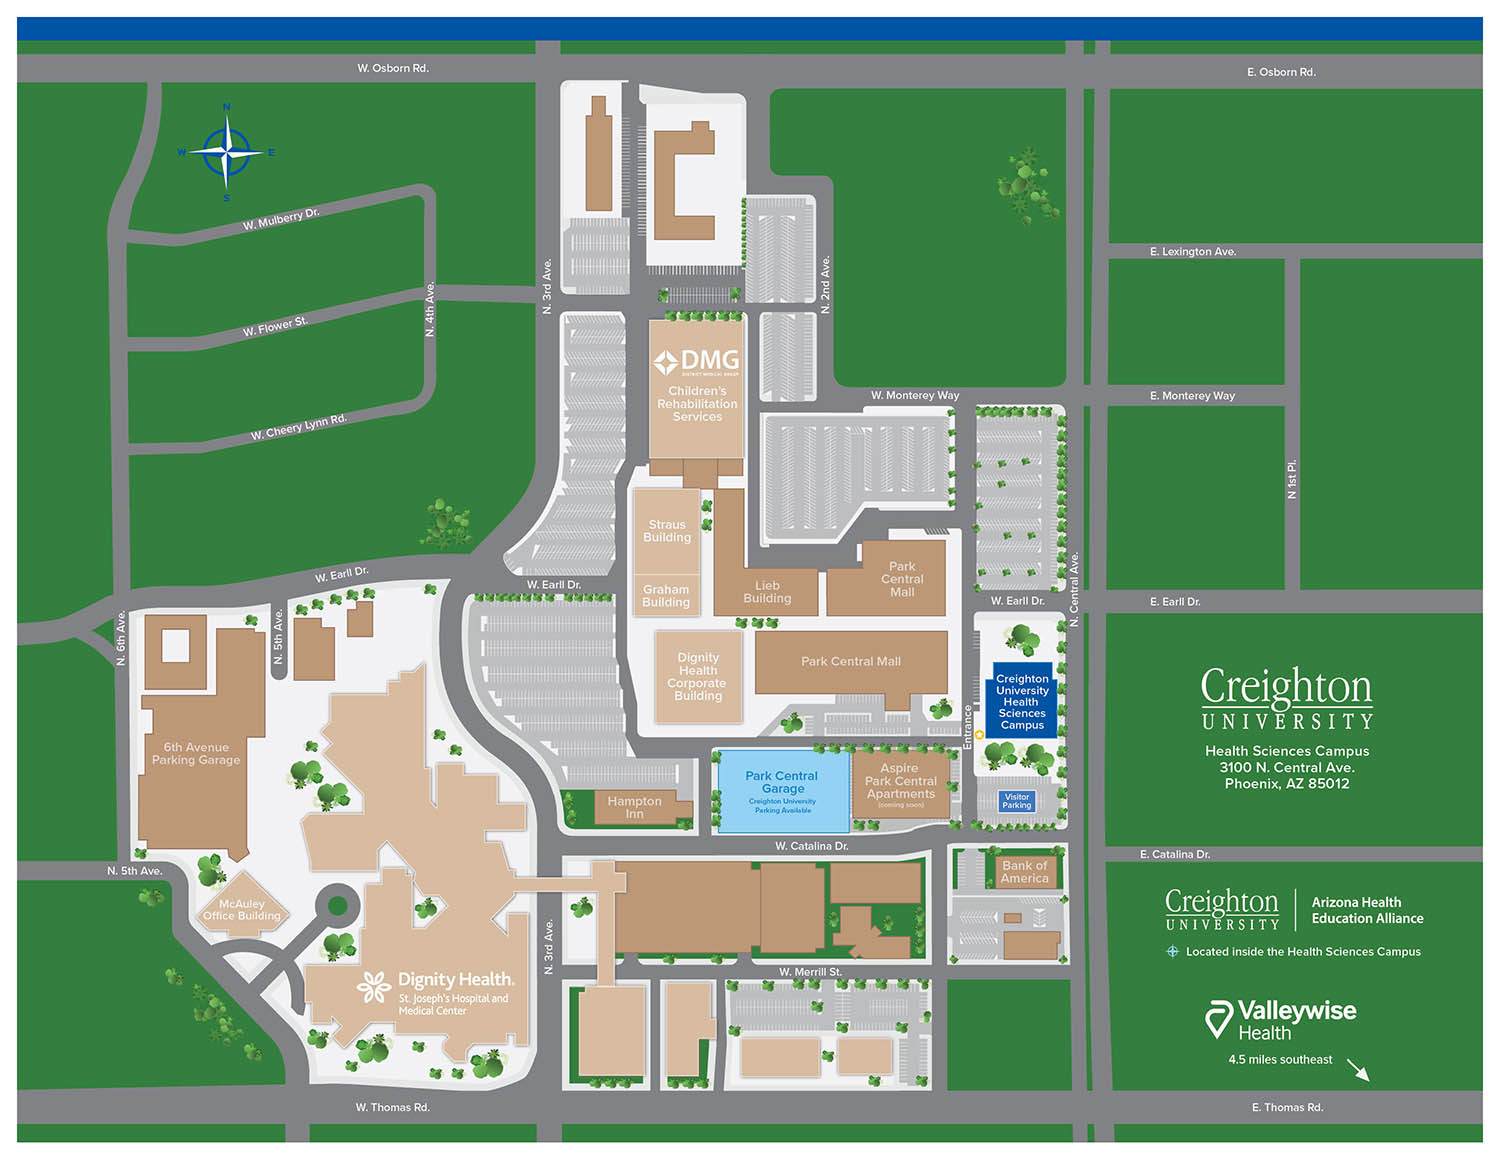 Creighton University Campus Map